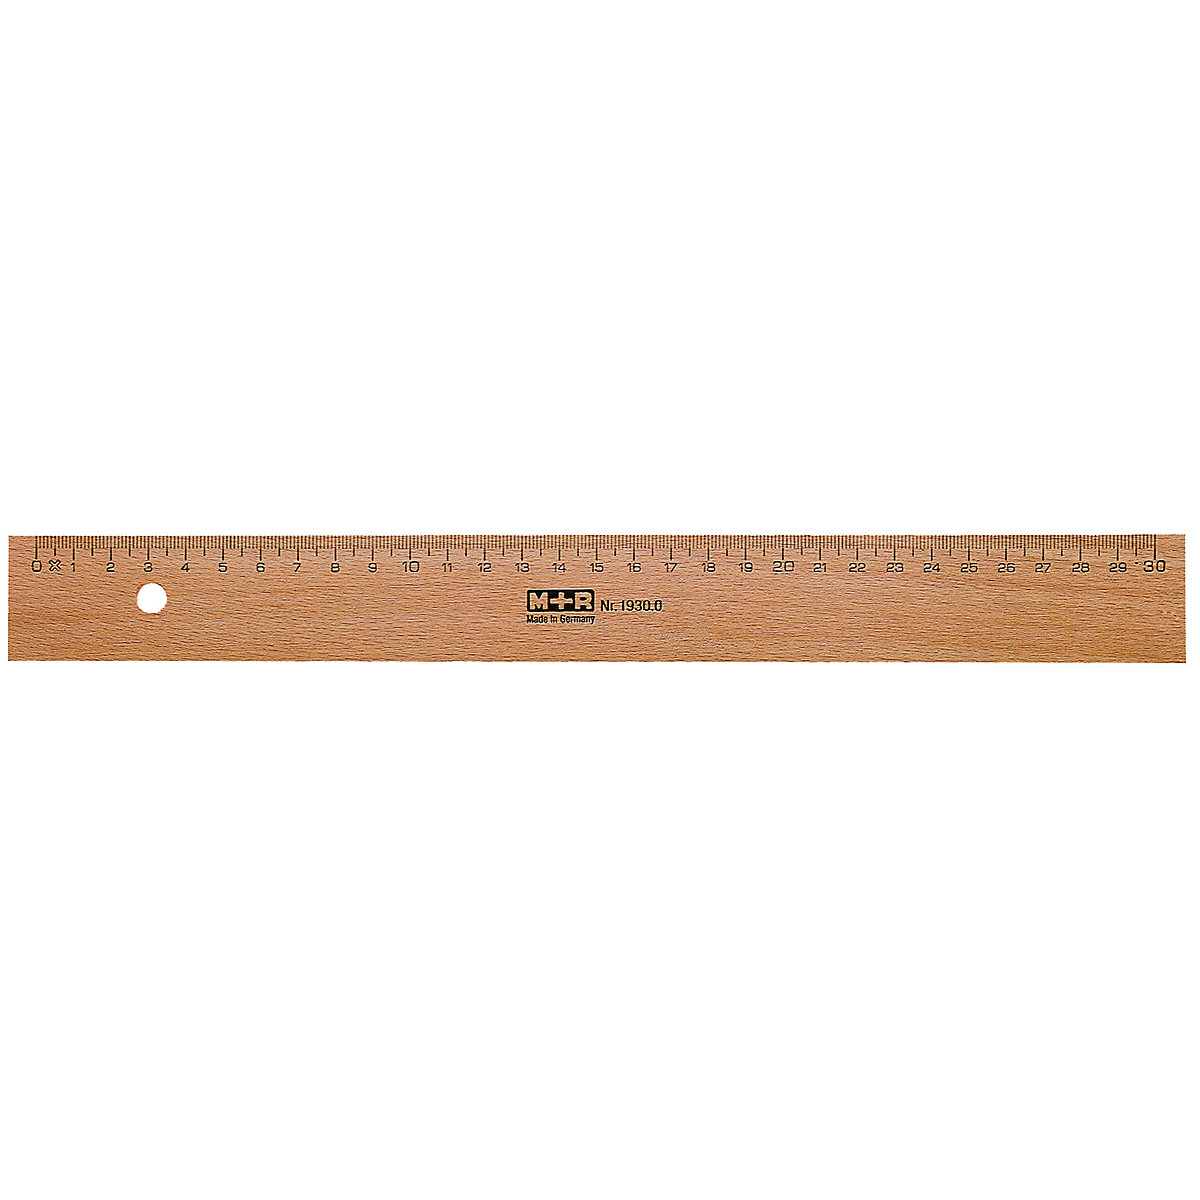 Wooden ruler 20 cm